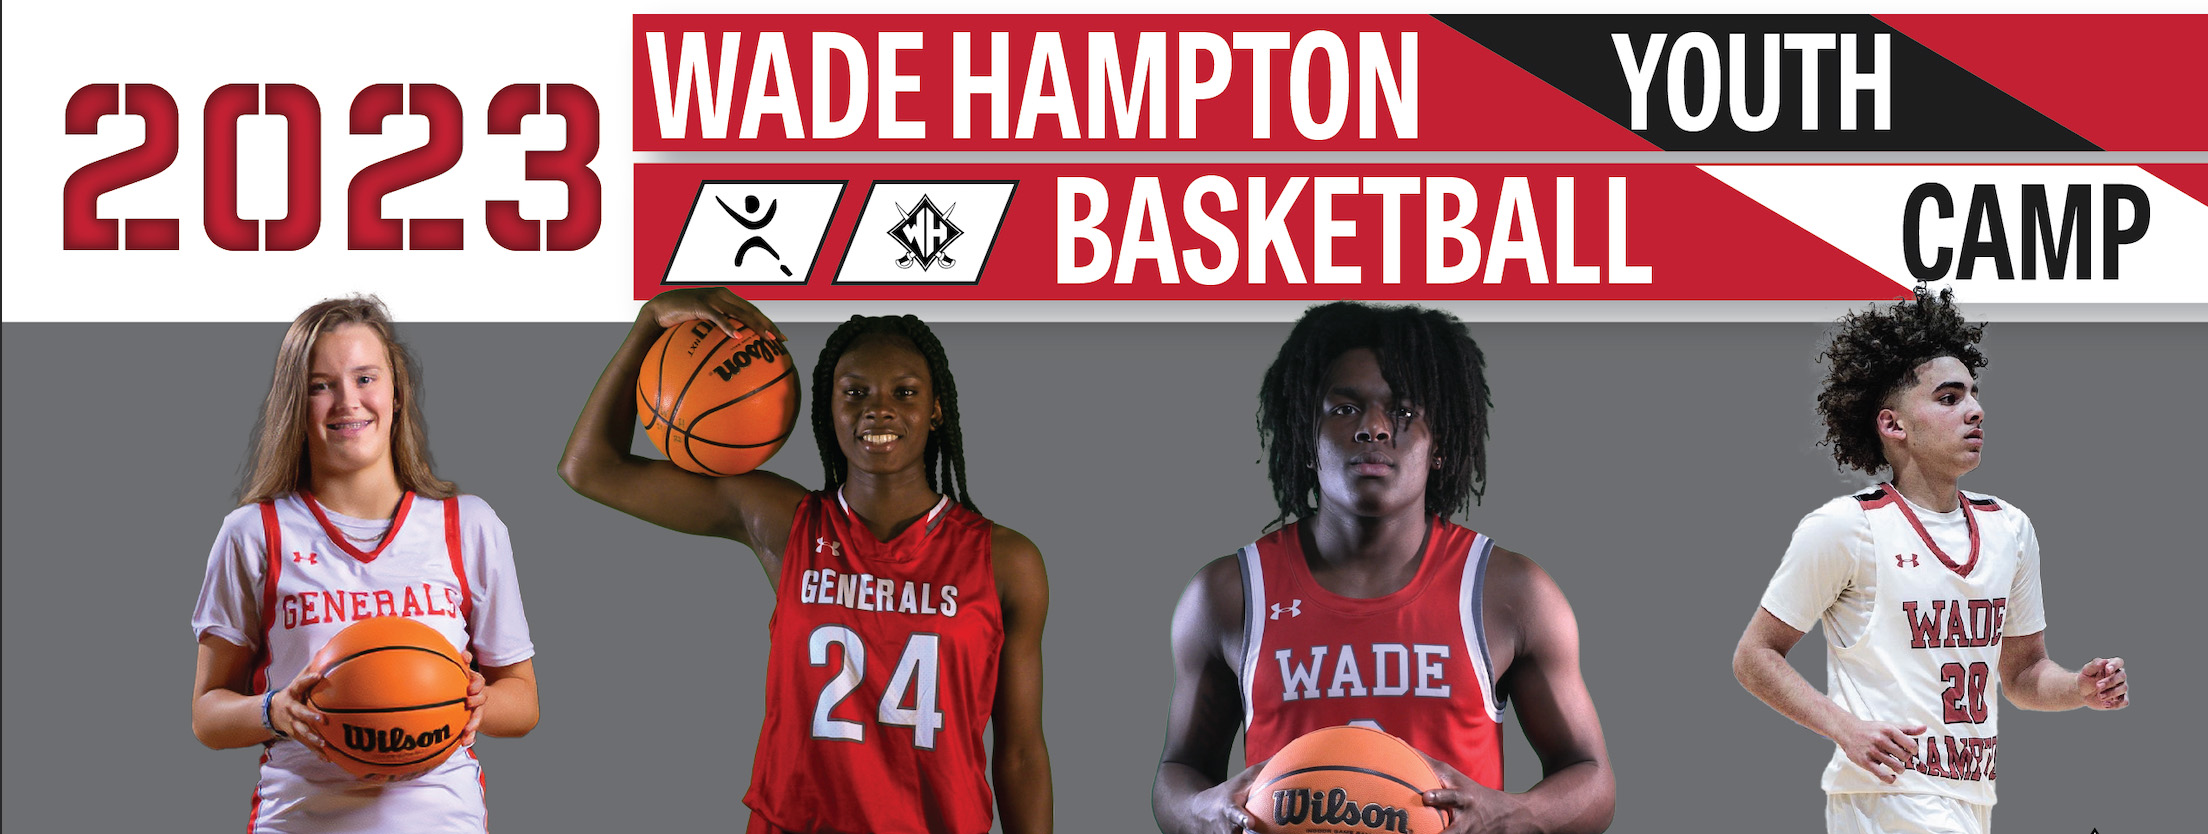 2023 Wade Hampton Youth Basketball Camp with 4 basketball players below.